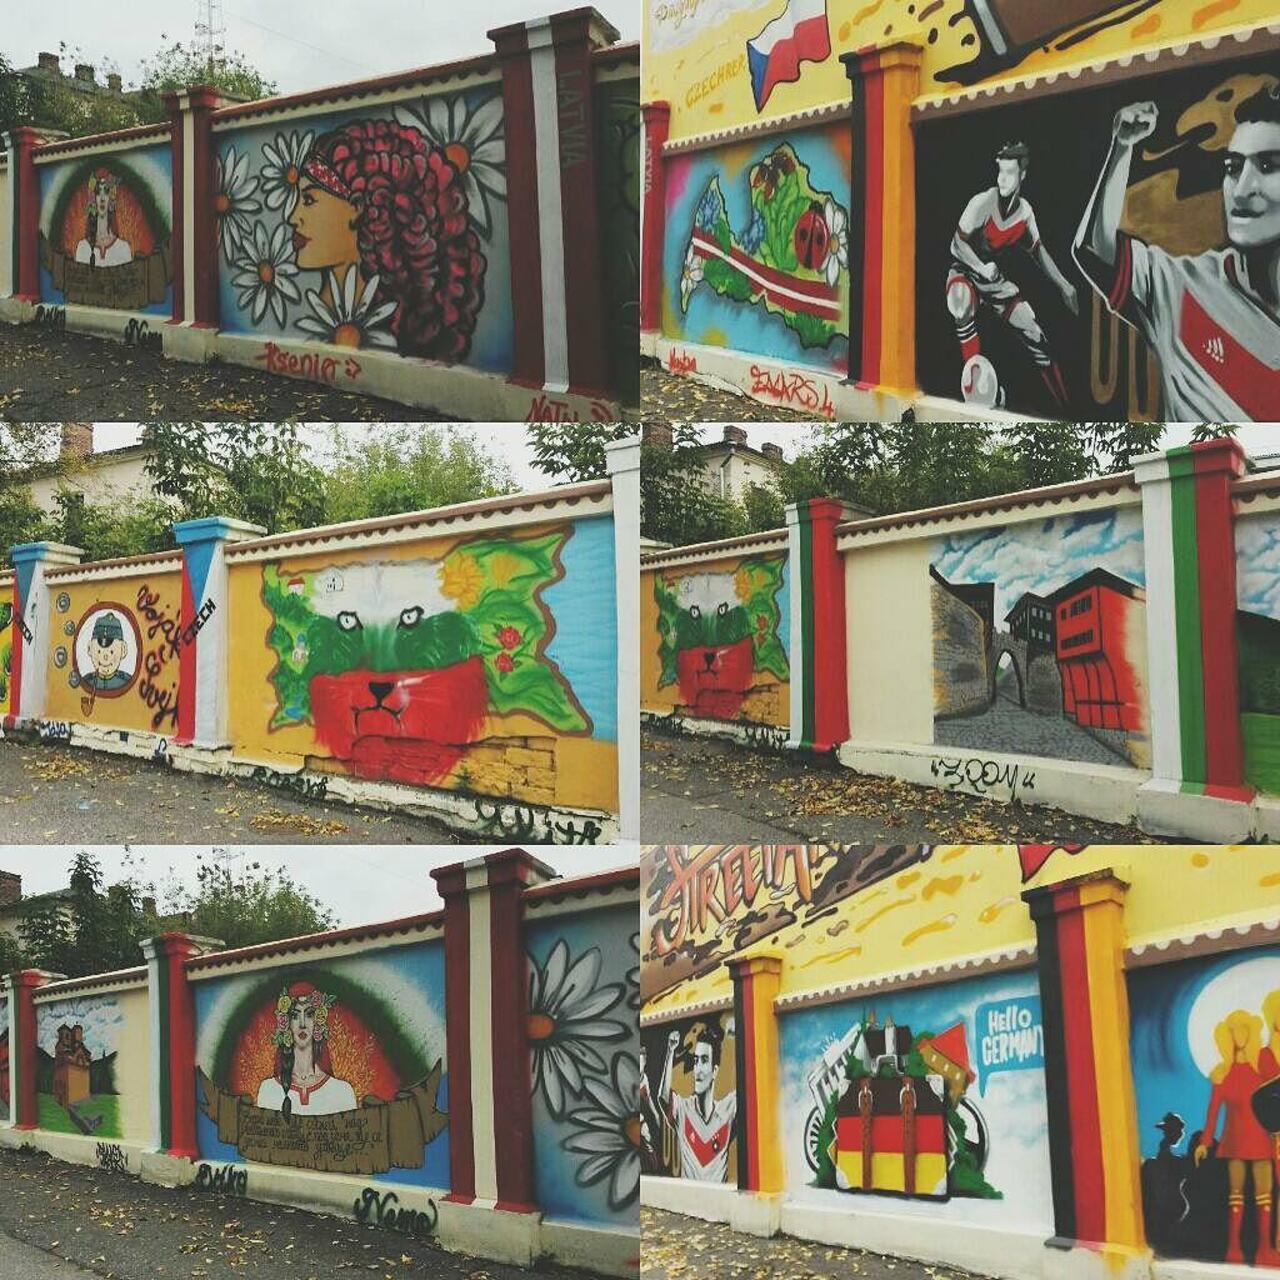 no edmiracle - #streetart #graffiti #daugavpils #даугавпилс #граффити #vsco
01♢10♢15 http://t.co/7pXEkV7N45